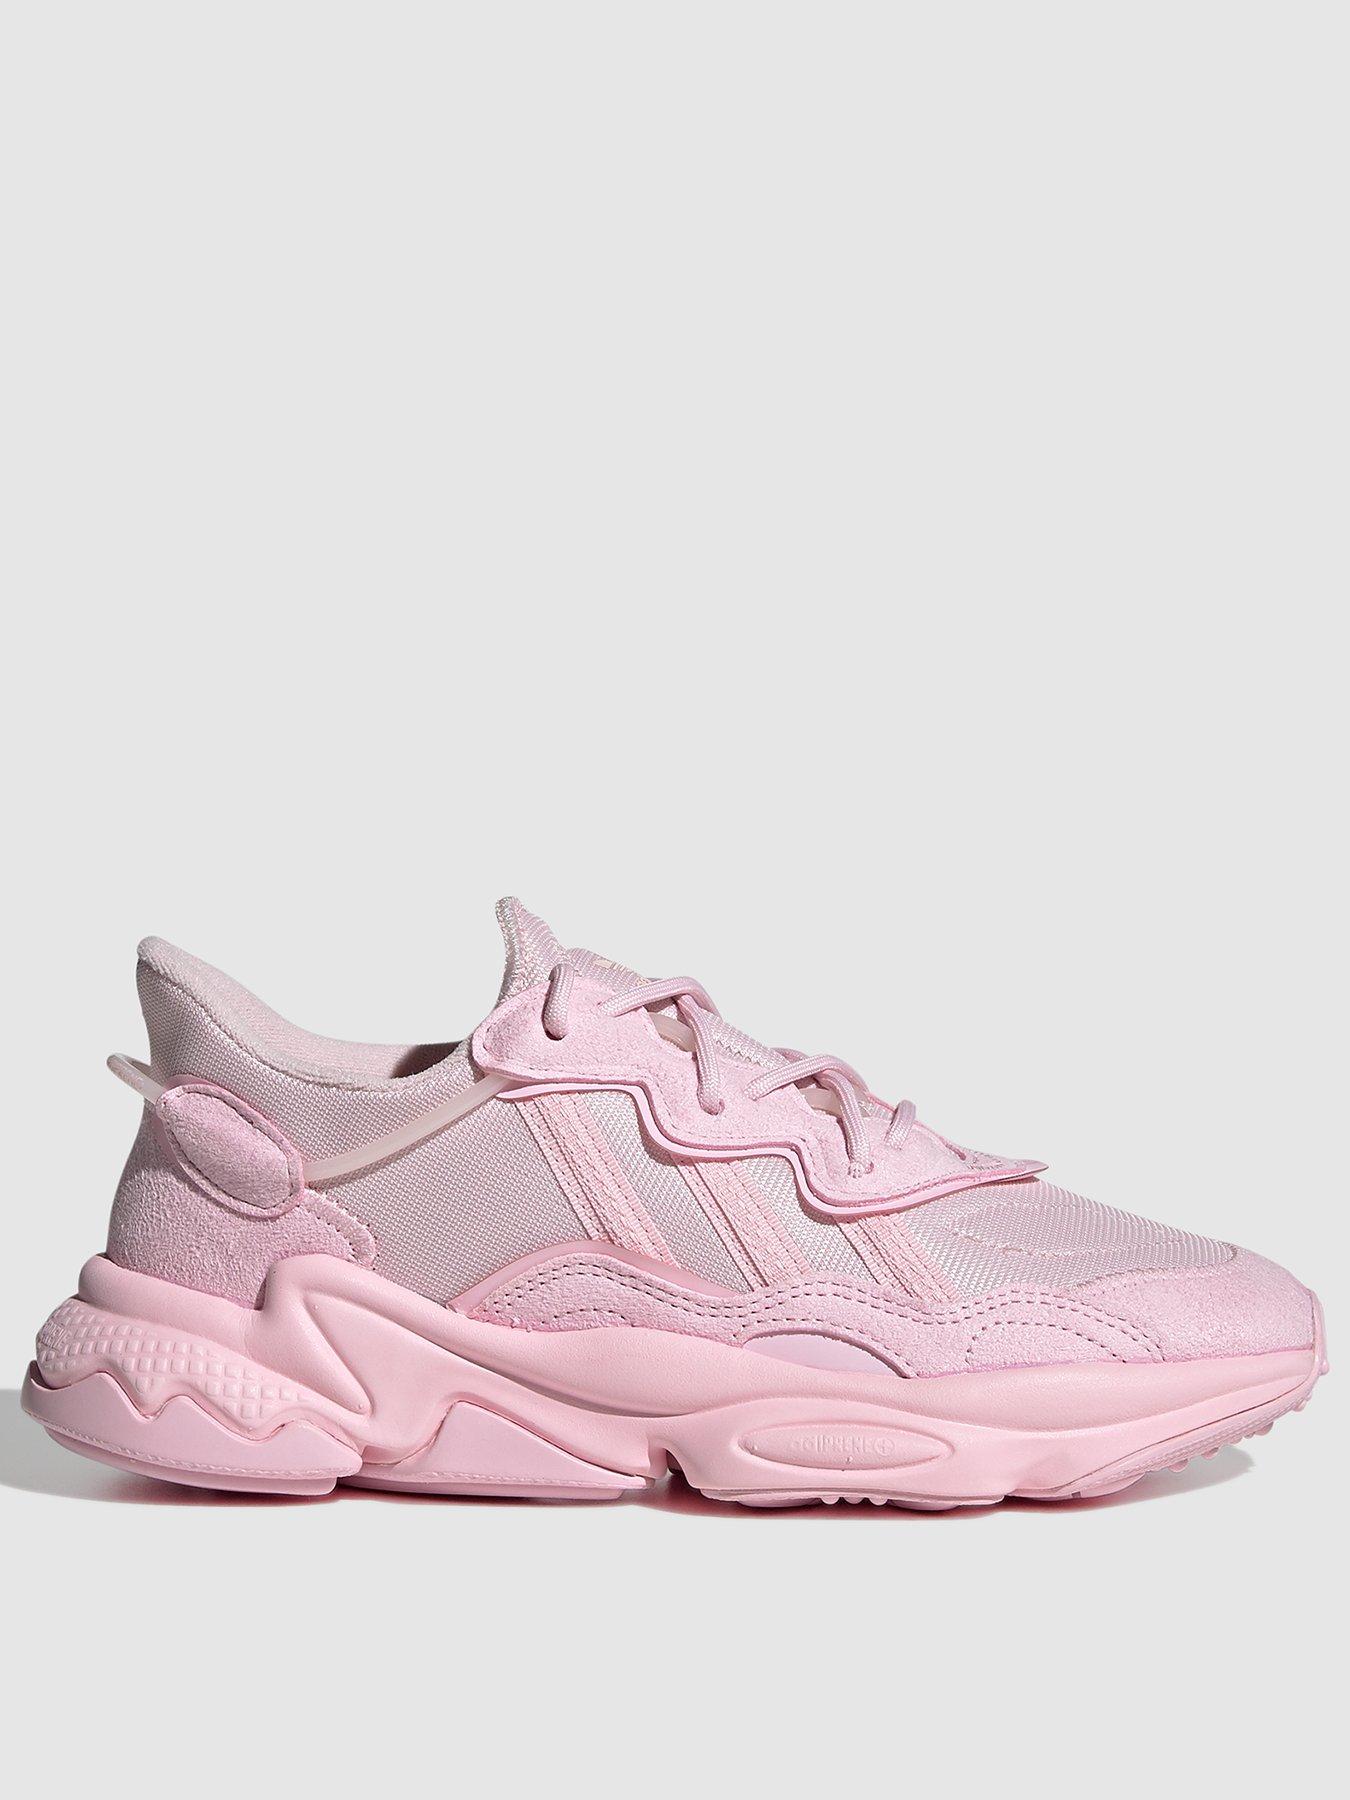 adidas ozweego hot pink